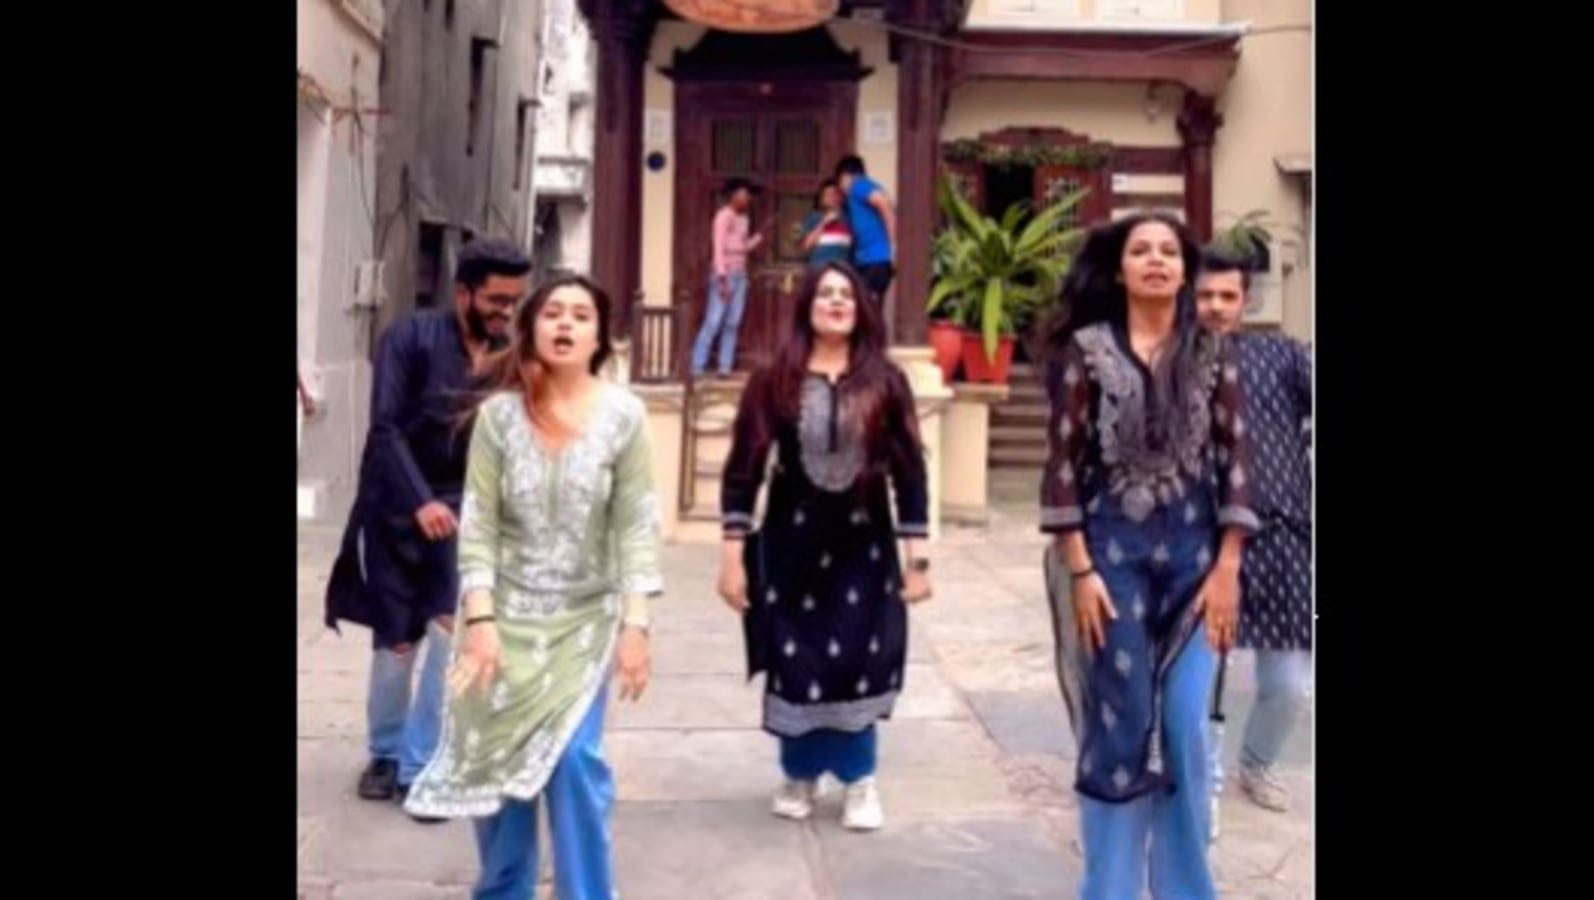 Shah Rukh Khan impressed by group's dance on Lutt Putt Gaya. Watch